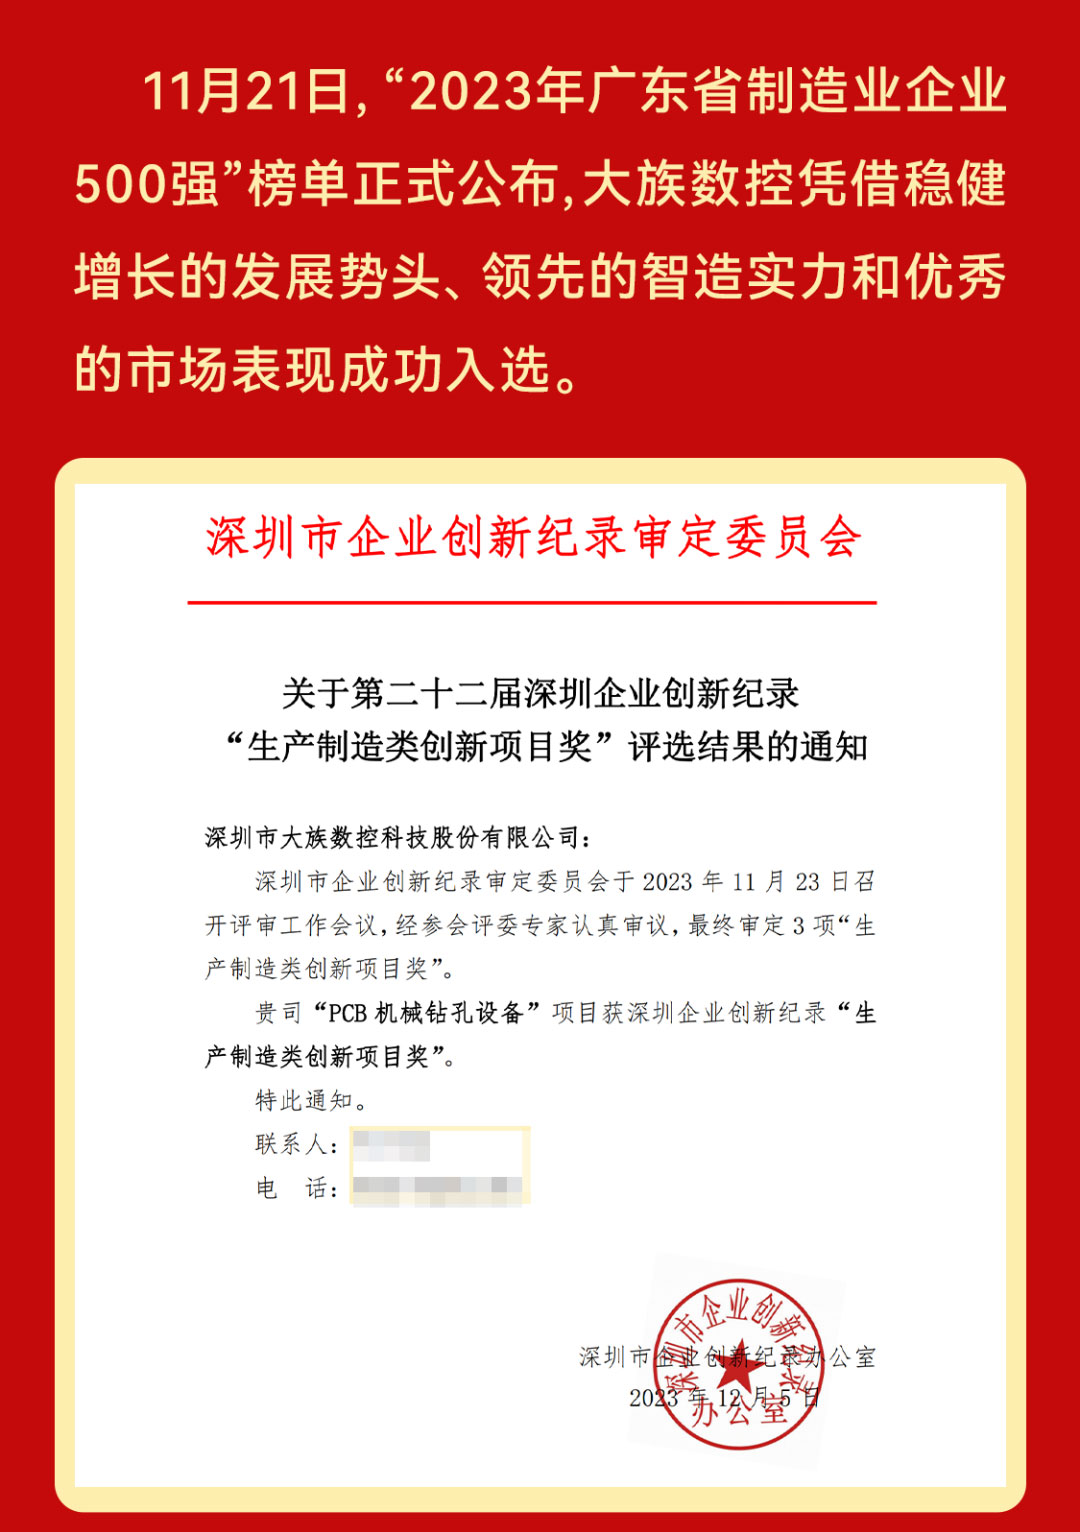 bat365在线中国官网登录入口